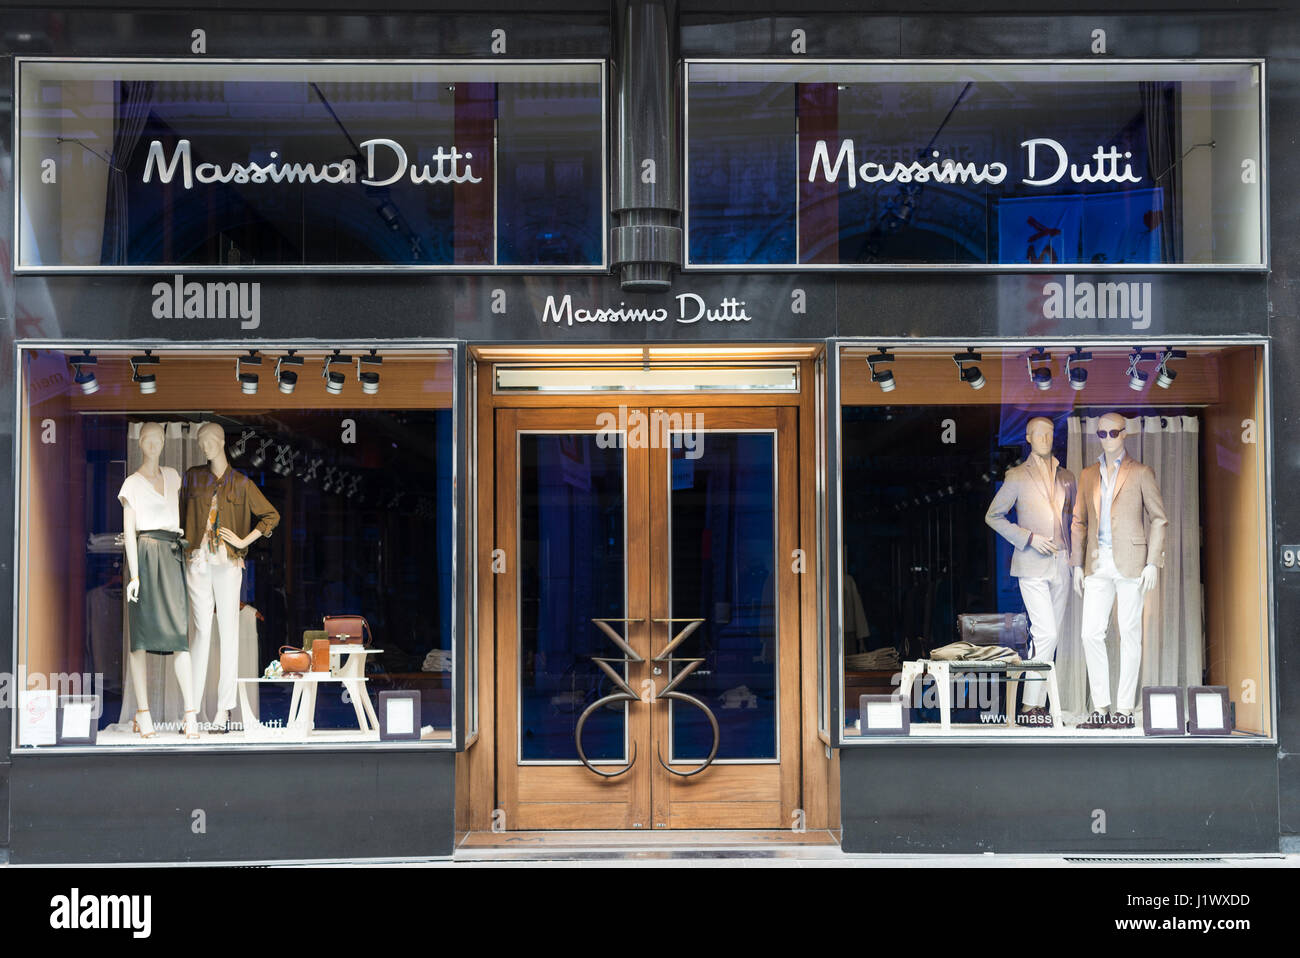 Massimo dutti shop -Fotos und -Bildmaterial in hoher Auflösung – Alamy